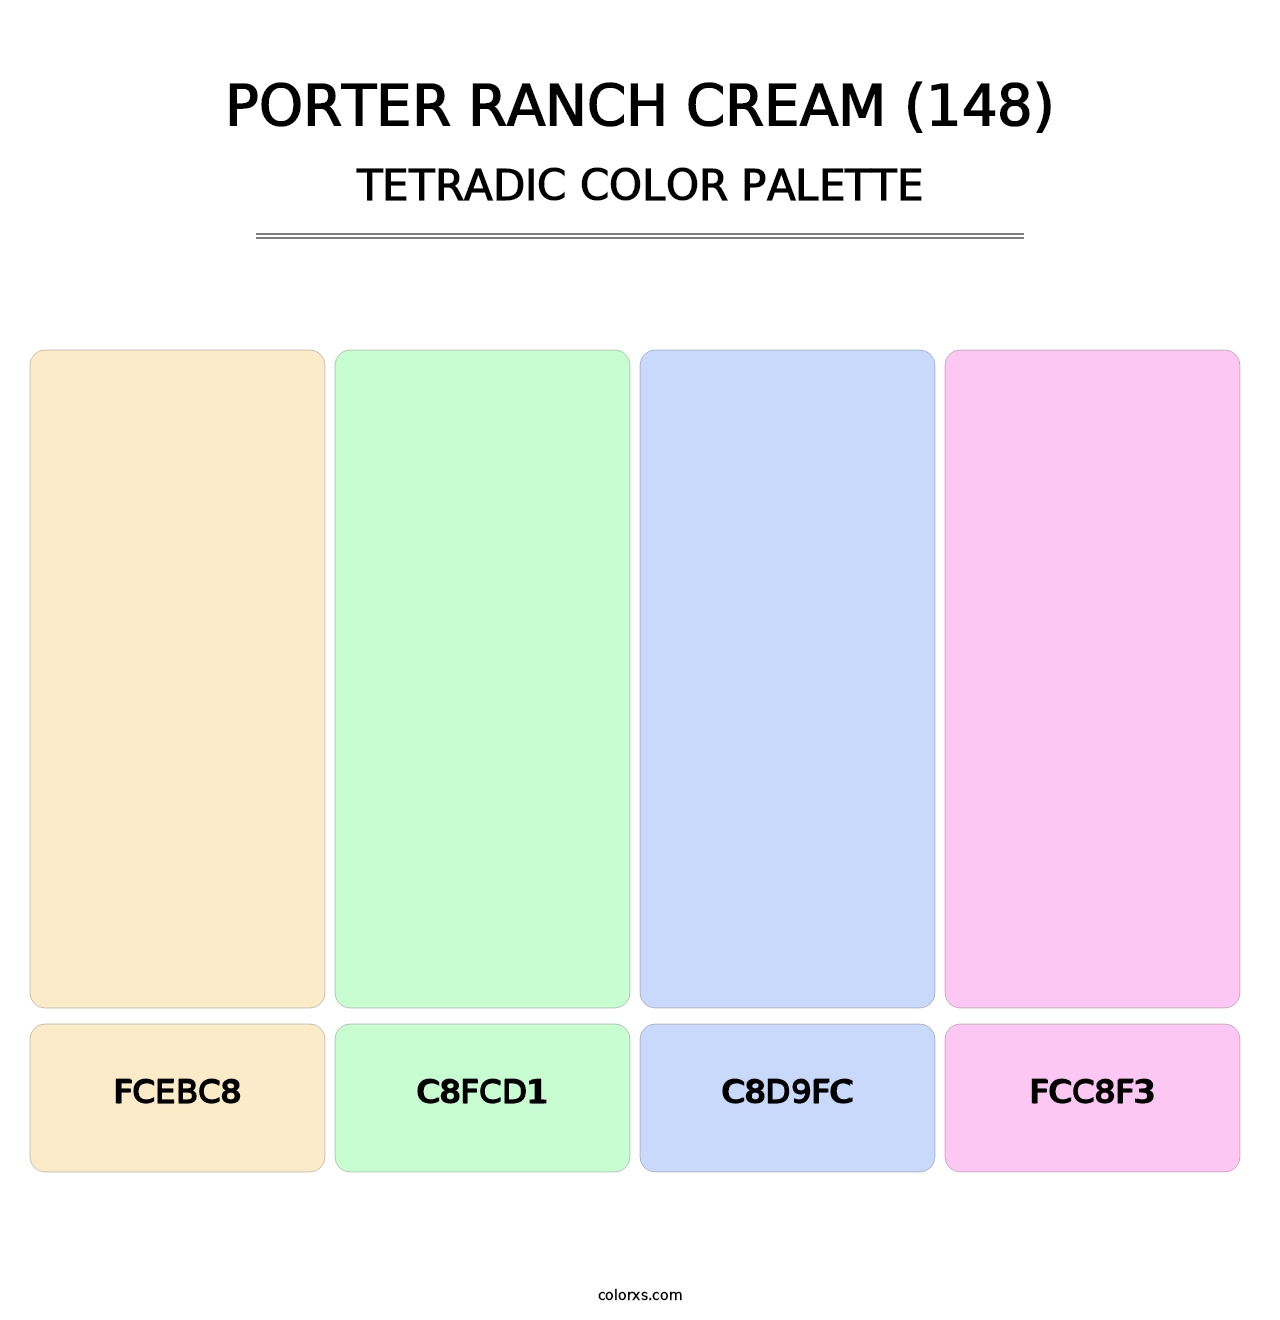 Porter Ranch Cream (148) - Tetradic Color Palette